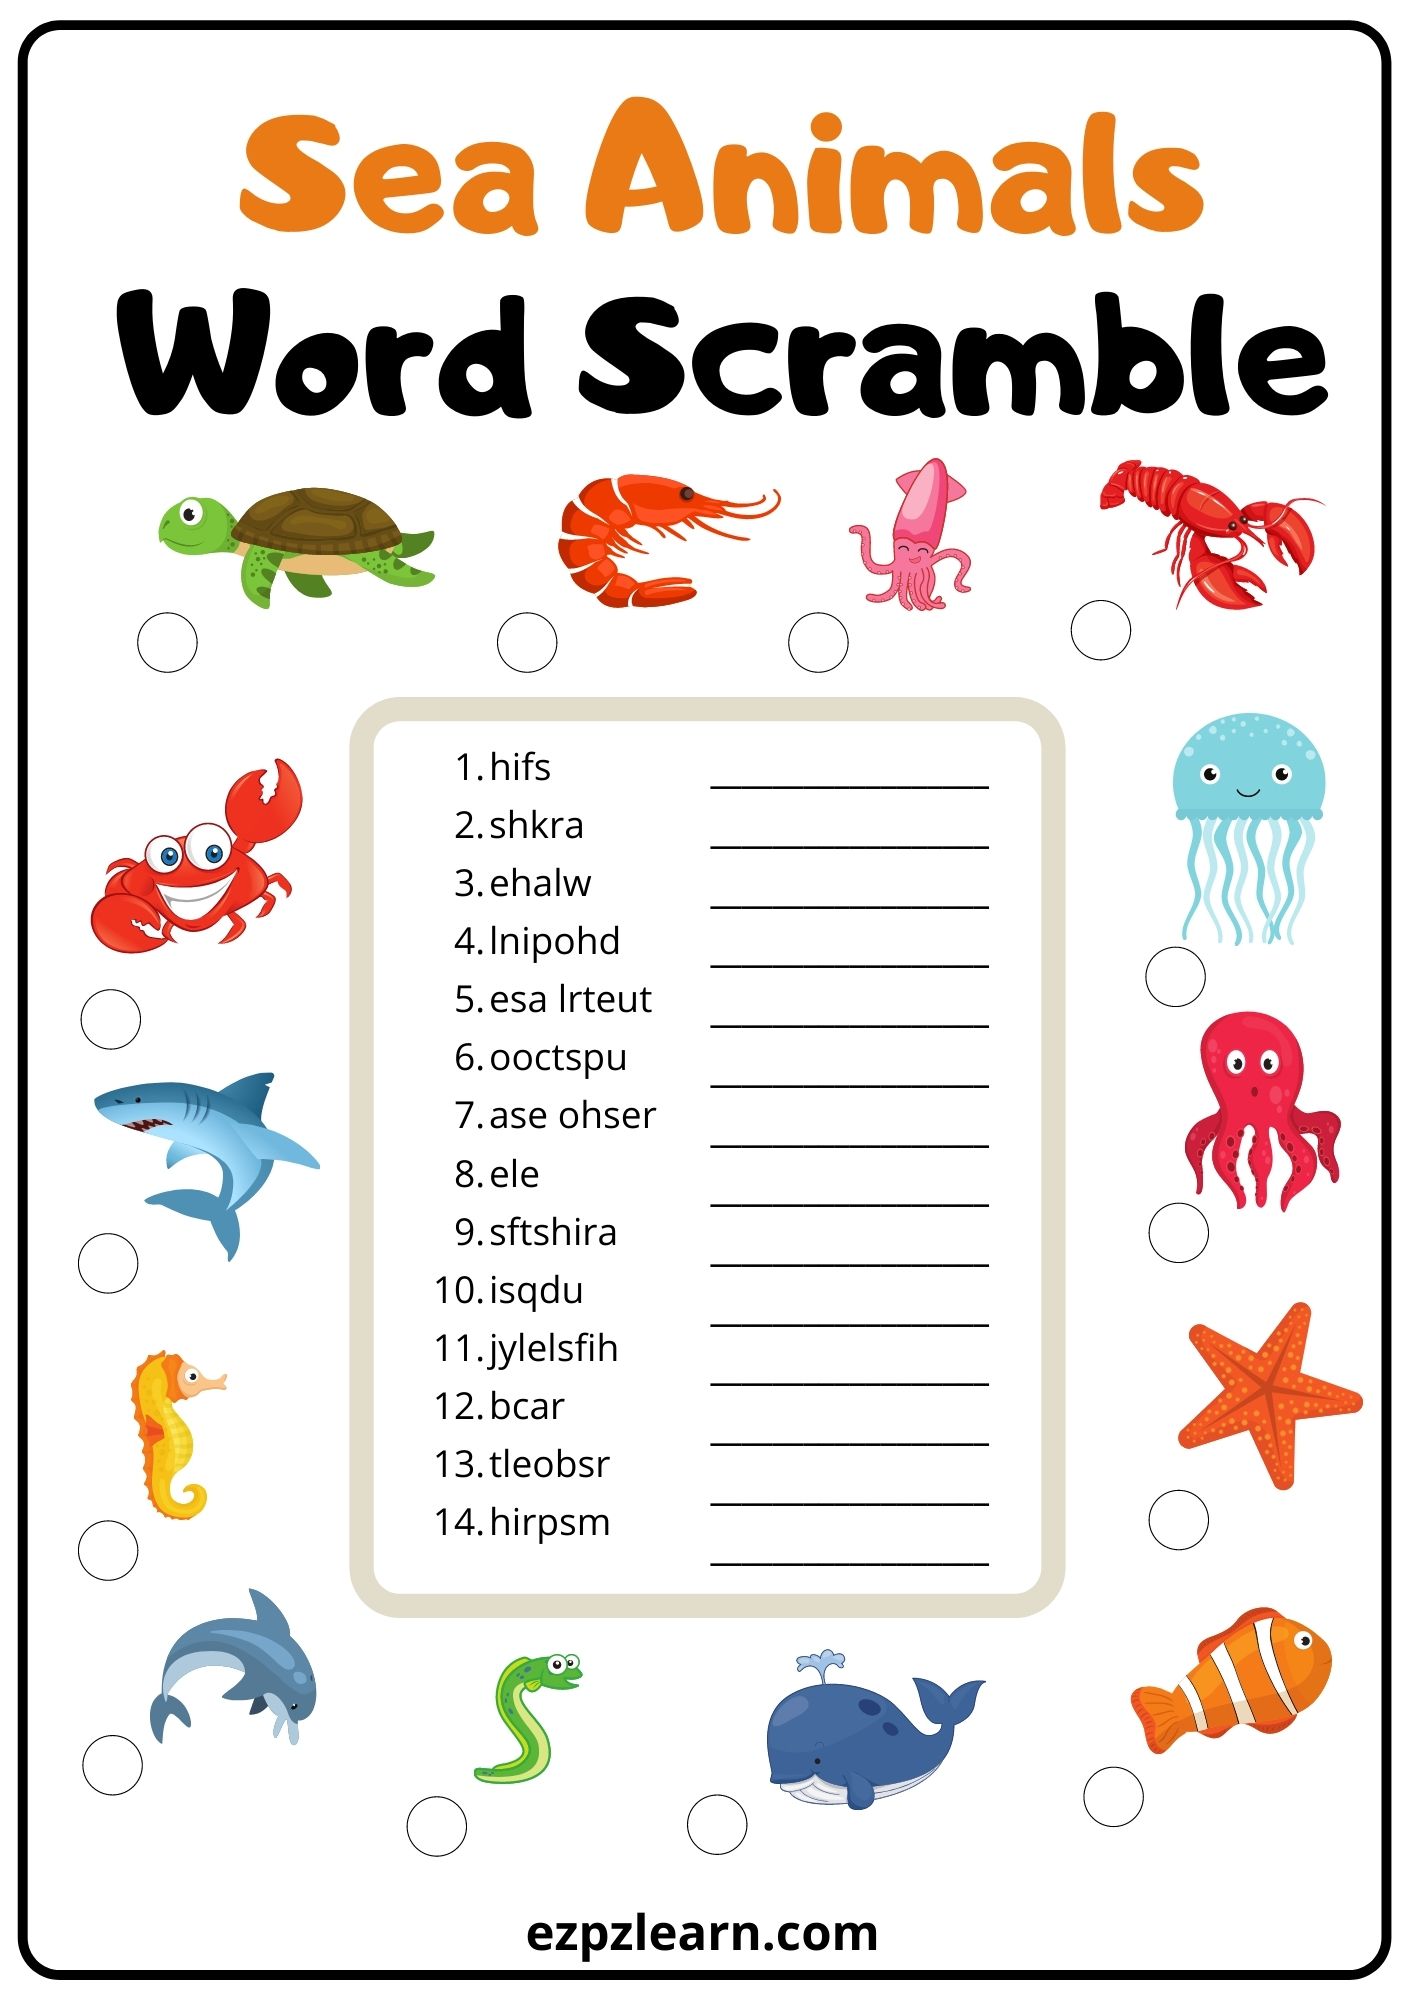 Sea Animals Word Scramble 2 